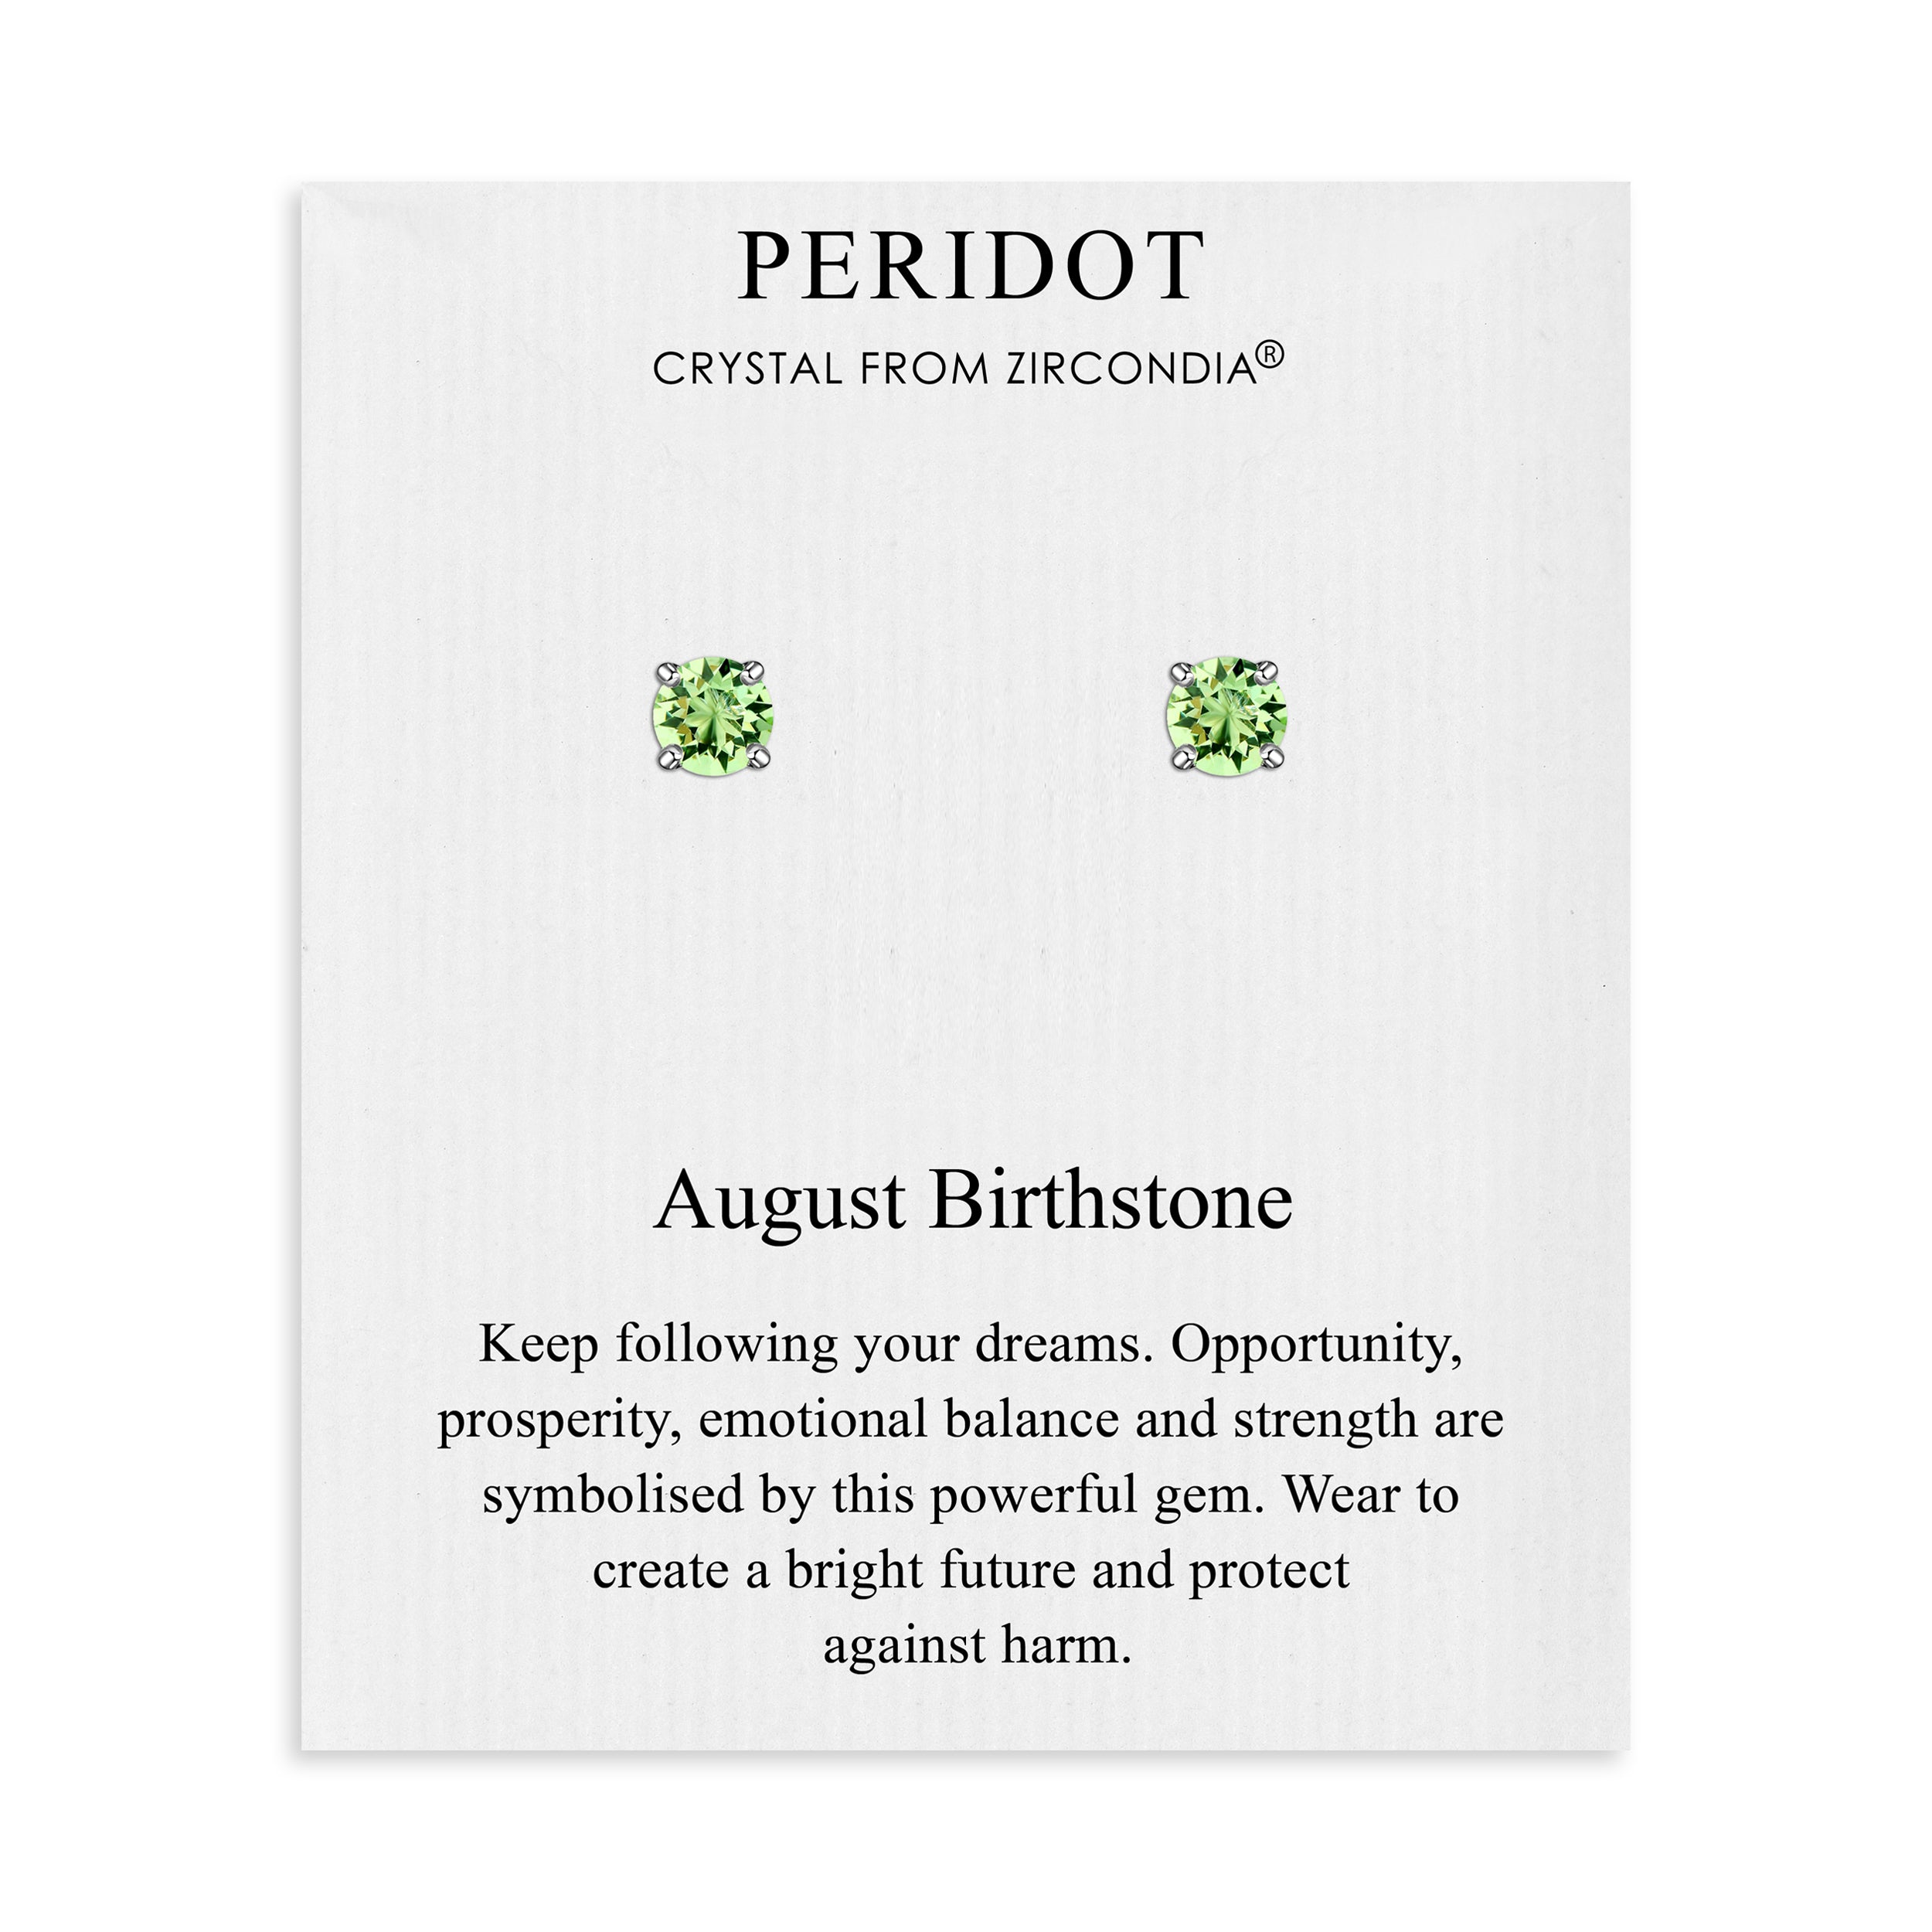 August (Peridot) Birthstone Earrings Created with Zircondia® Crystals by Philip Jones Jewellery